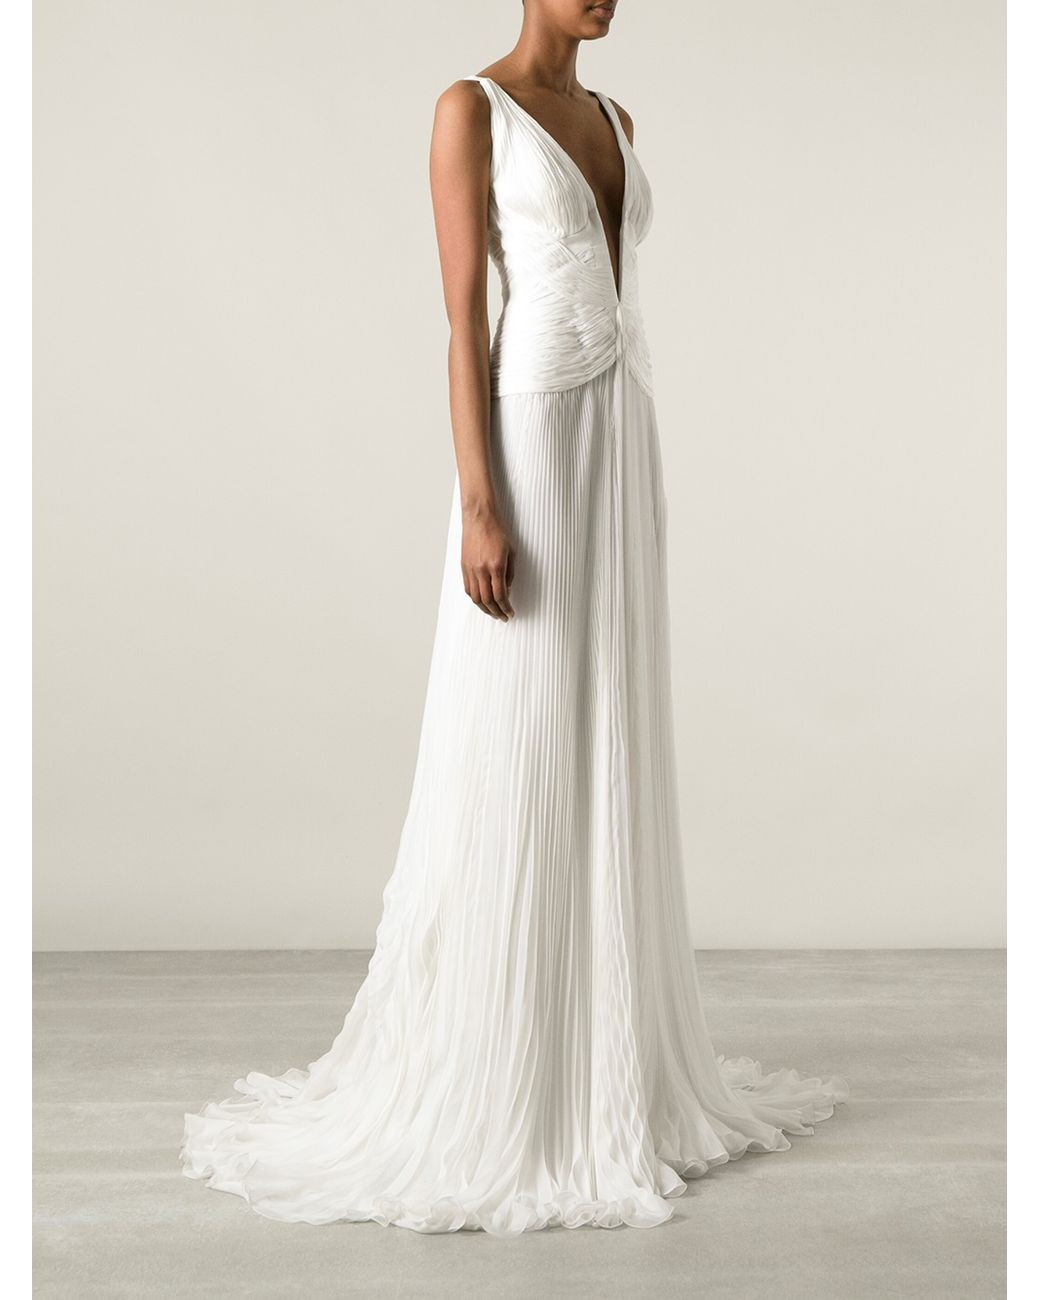 Exclusive Roberto Cavalli on Halle Berry Wedding Dress Predictions  E  Online